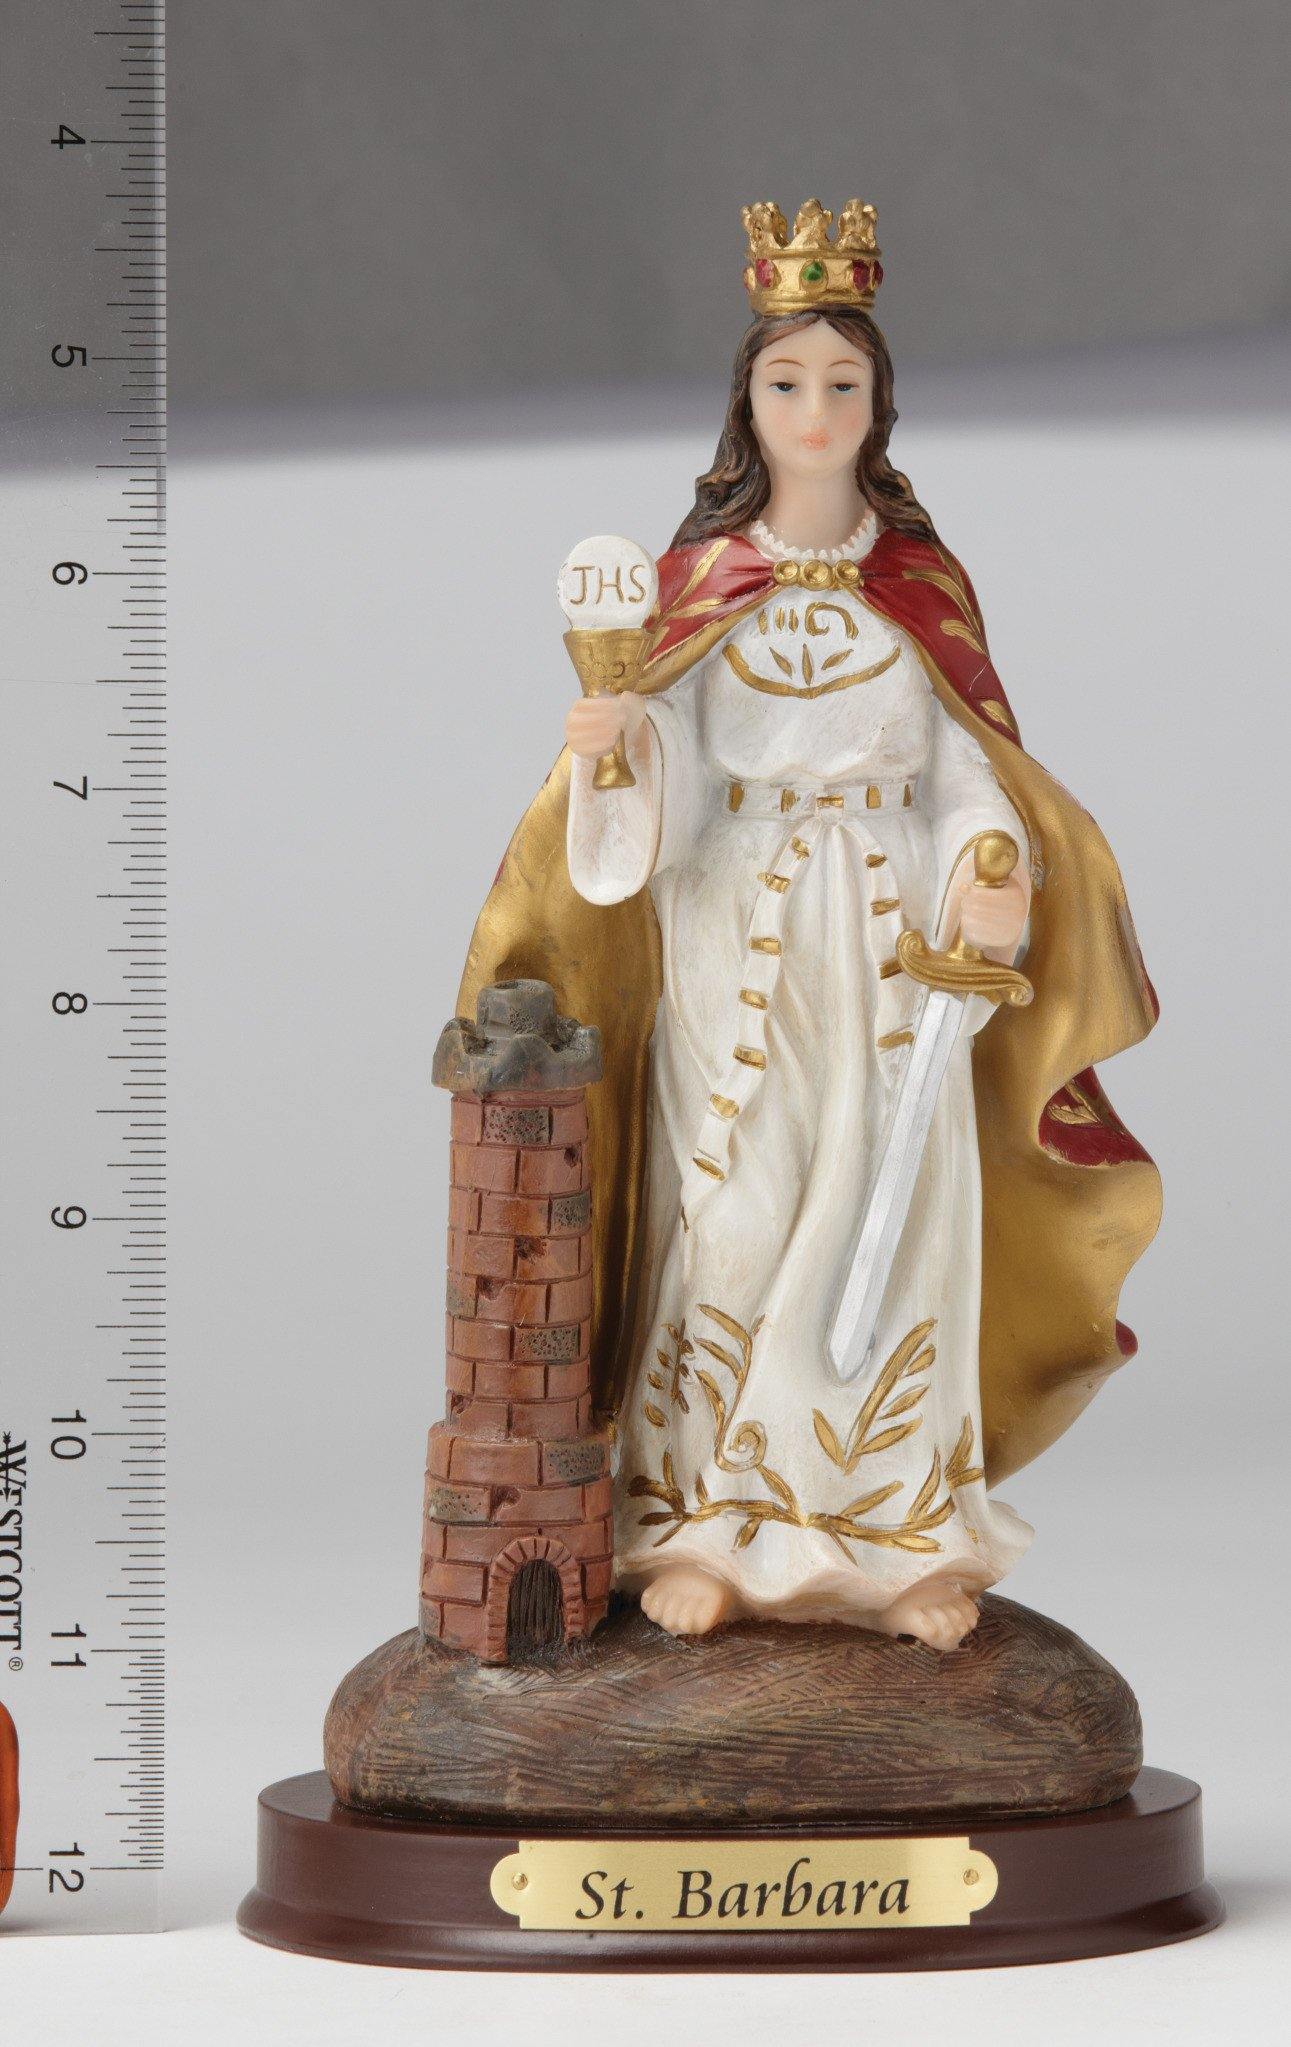 8" Saint Barbara Statue - Hand Painted - Religious Art - Chiarelli's Religious Goods & Church Supply